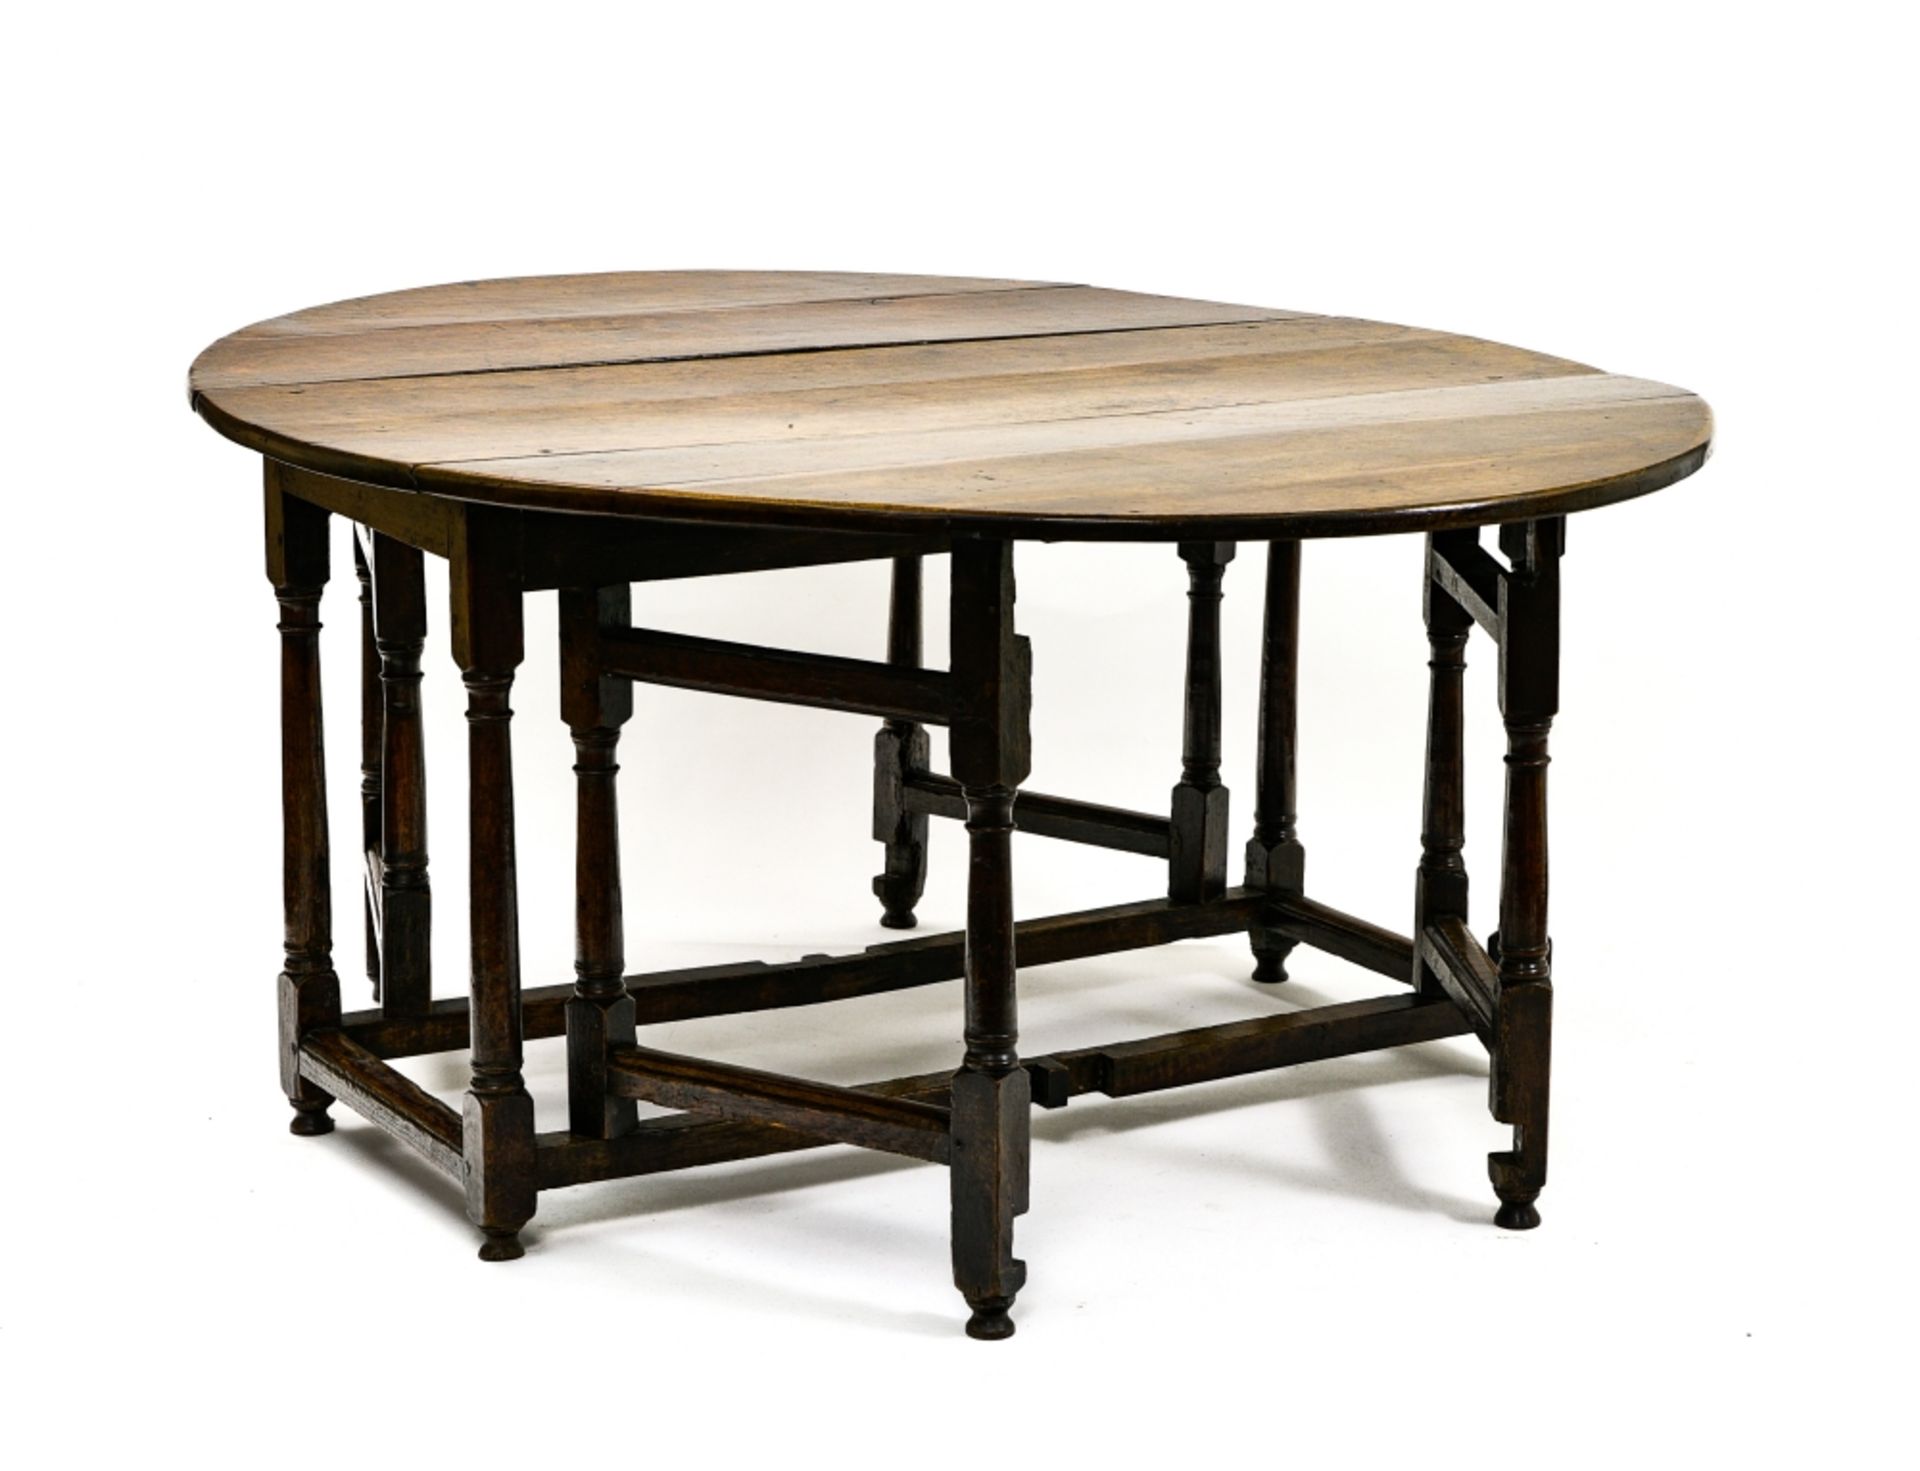 Gateleg table EARLY 18TH CENTURY ENGLISH WORK oak wood, oval-shaped with baluster base H : 74 cm - Image 2 of 2